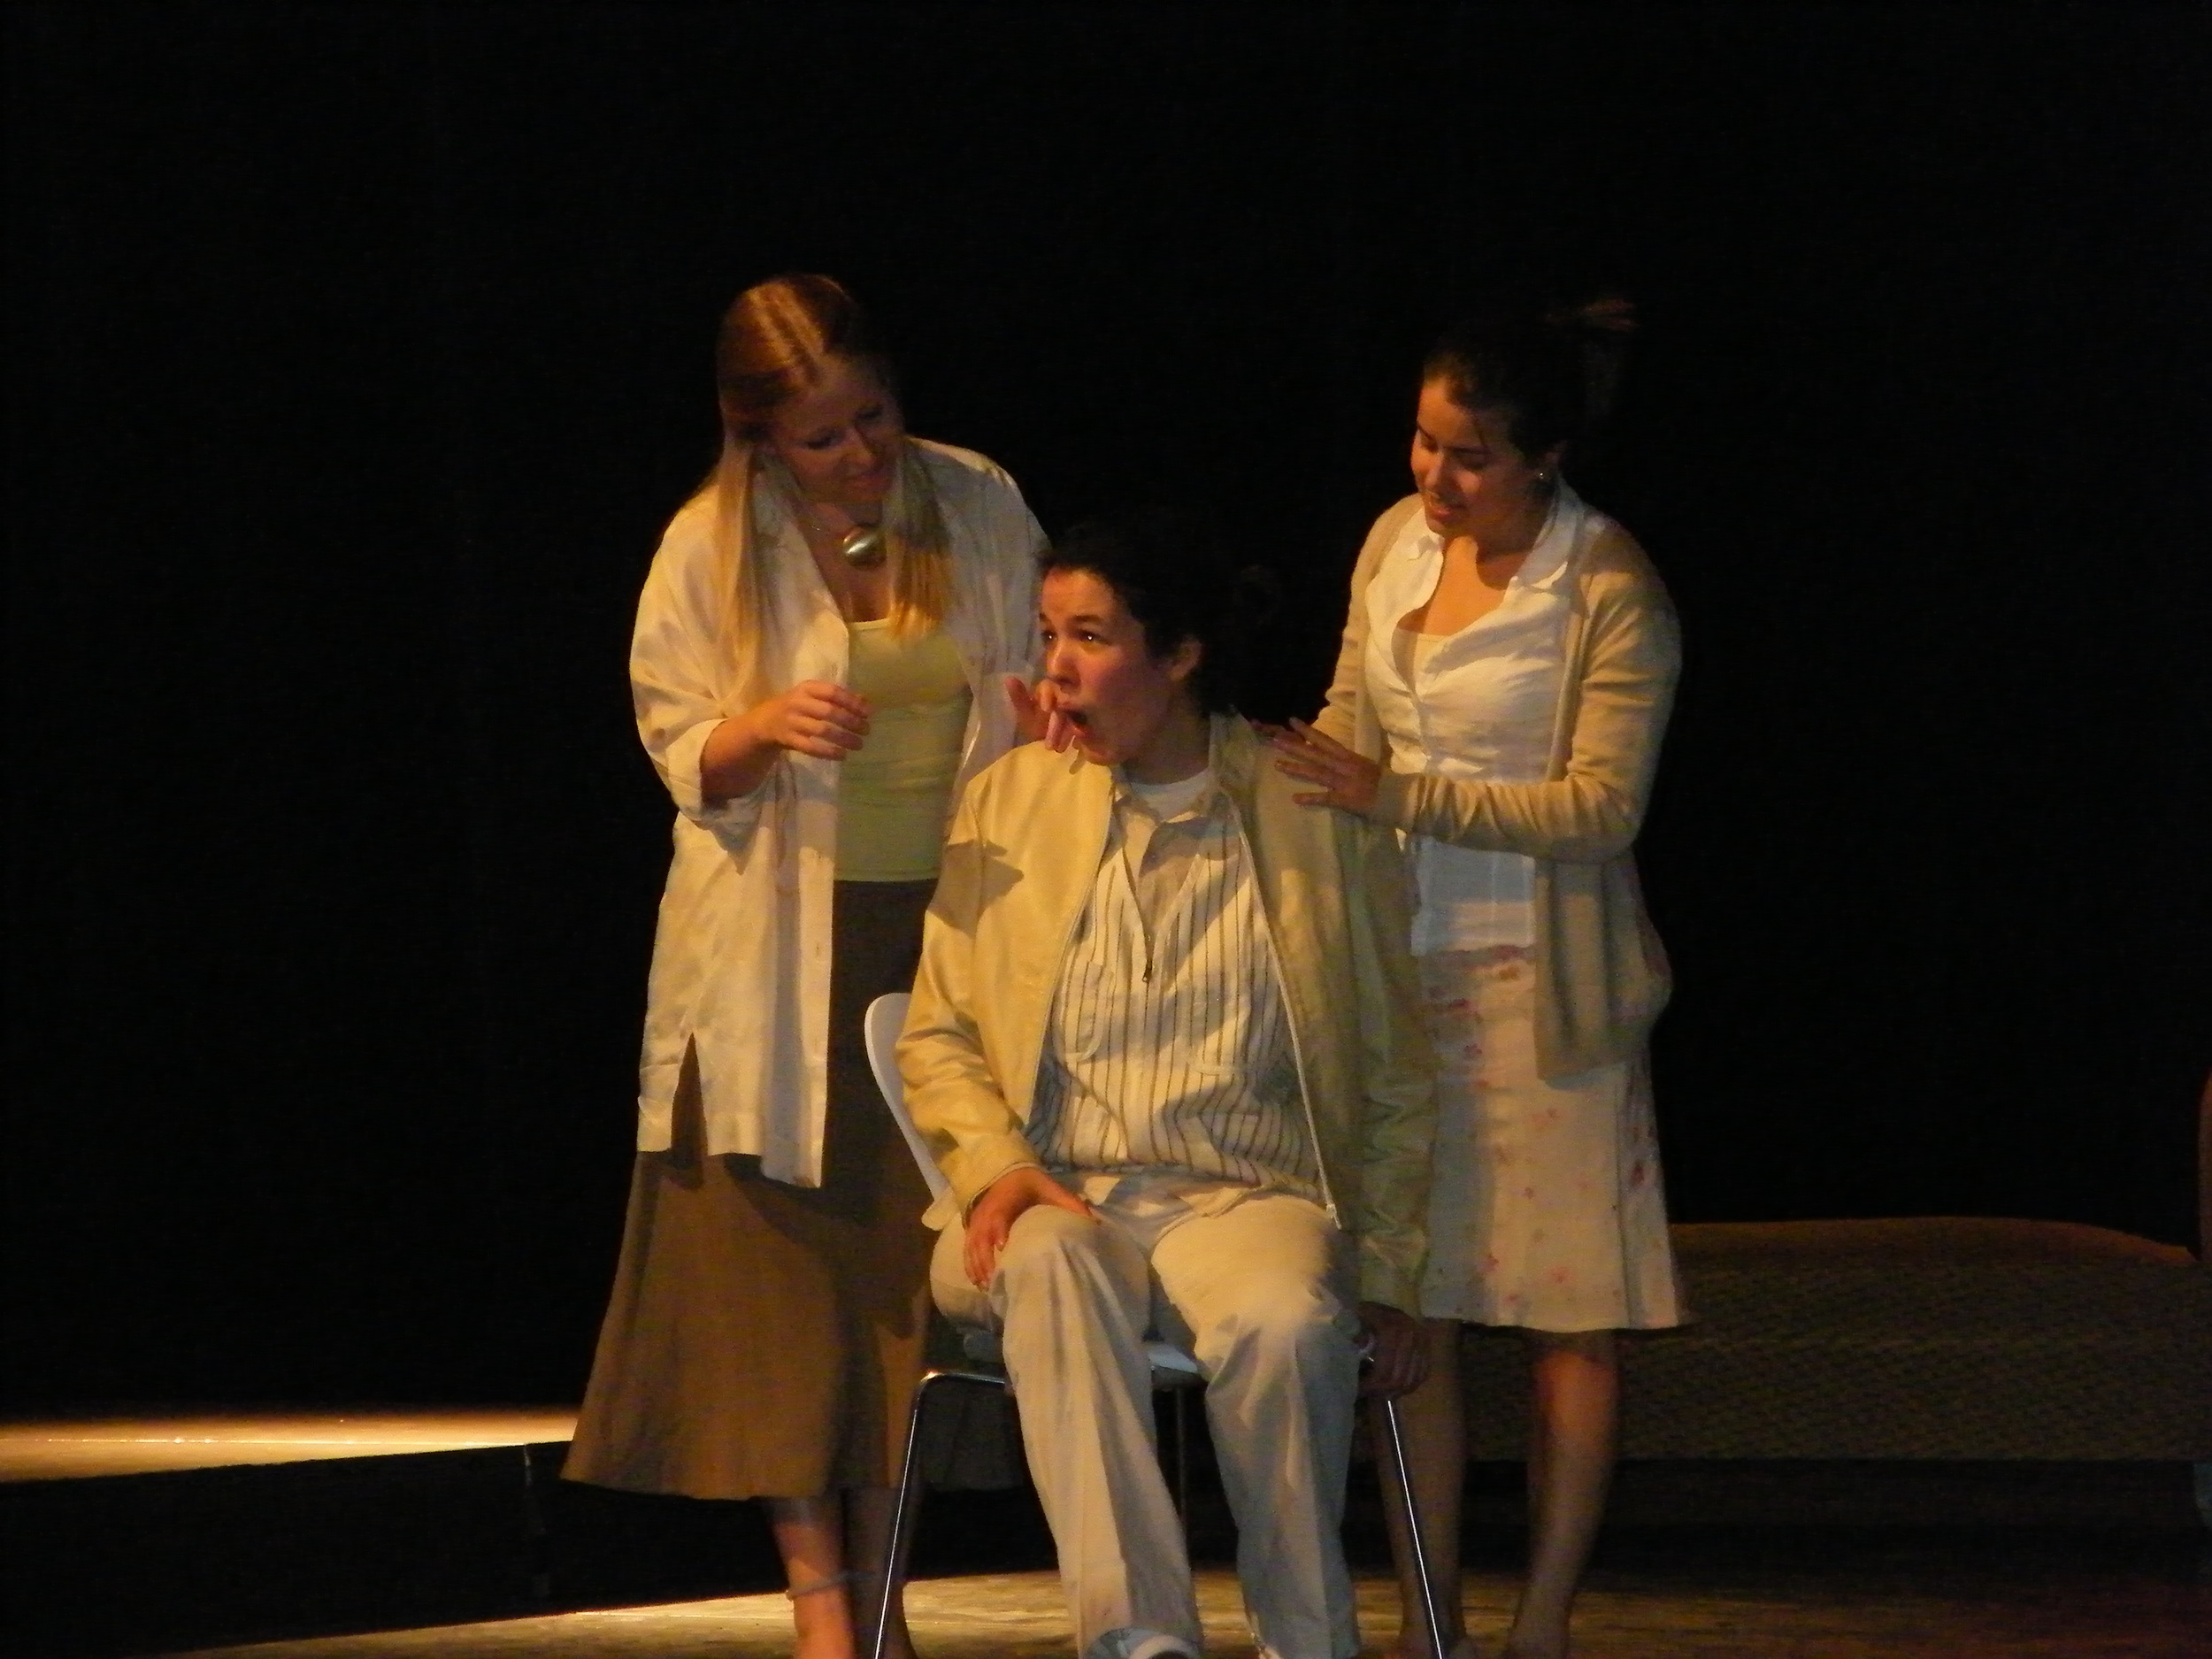 Dress rehearsel 'Le nozze di Figaro' - Susanna (Elsi Spanoghe),  The Countess Almaviva (Karlijn Noten) en Cherubino (Trees Beckwé) (November 2015)